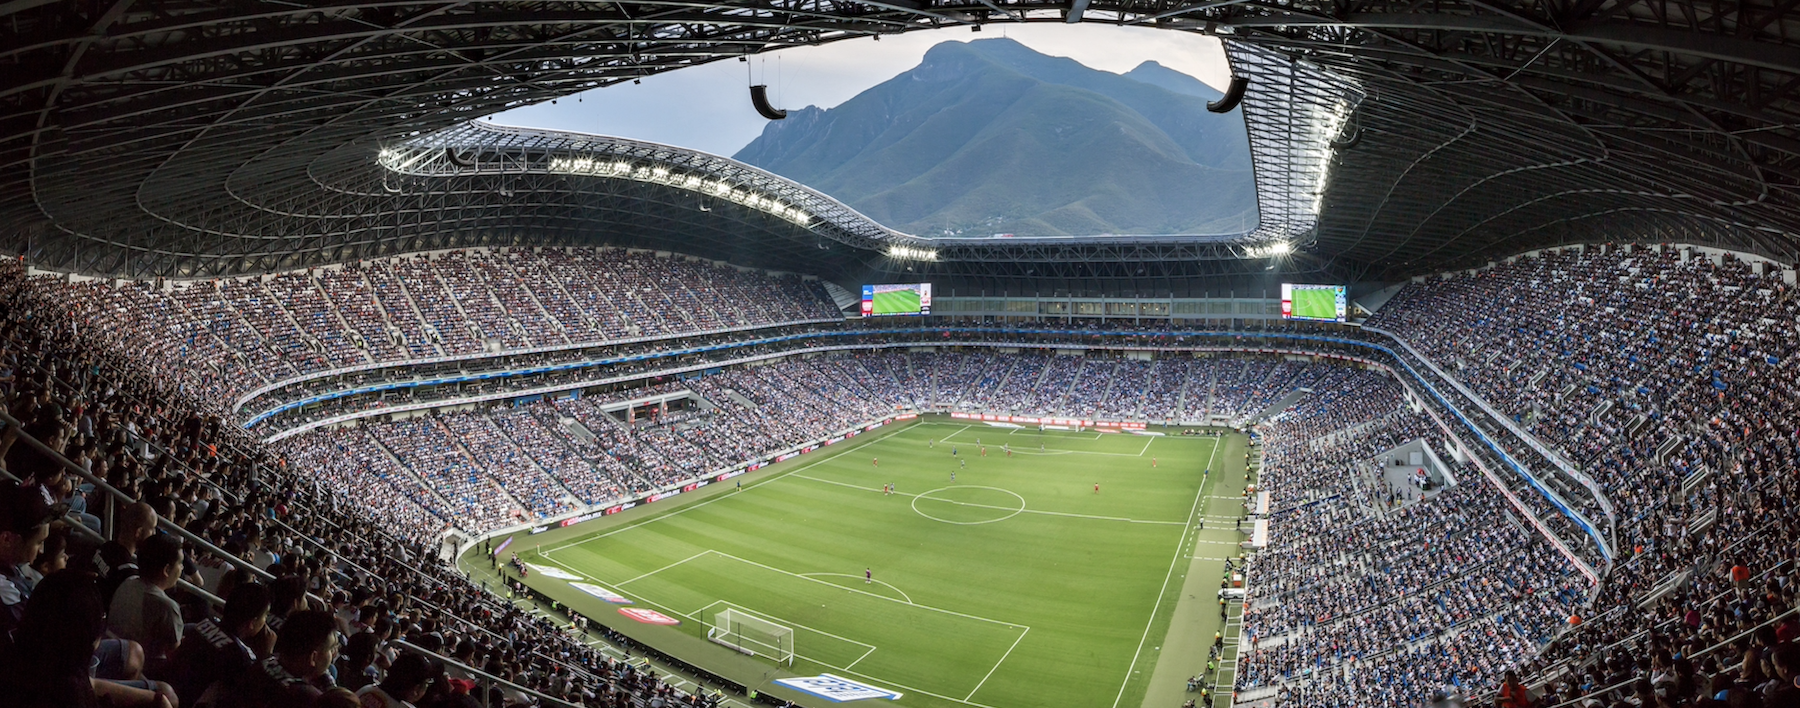 BBVA Stadium in Monterrey, Mexico, one of Populous' projects. Image: Jorge Torbaoda/Populous